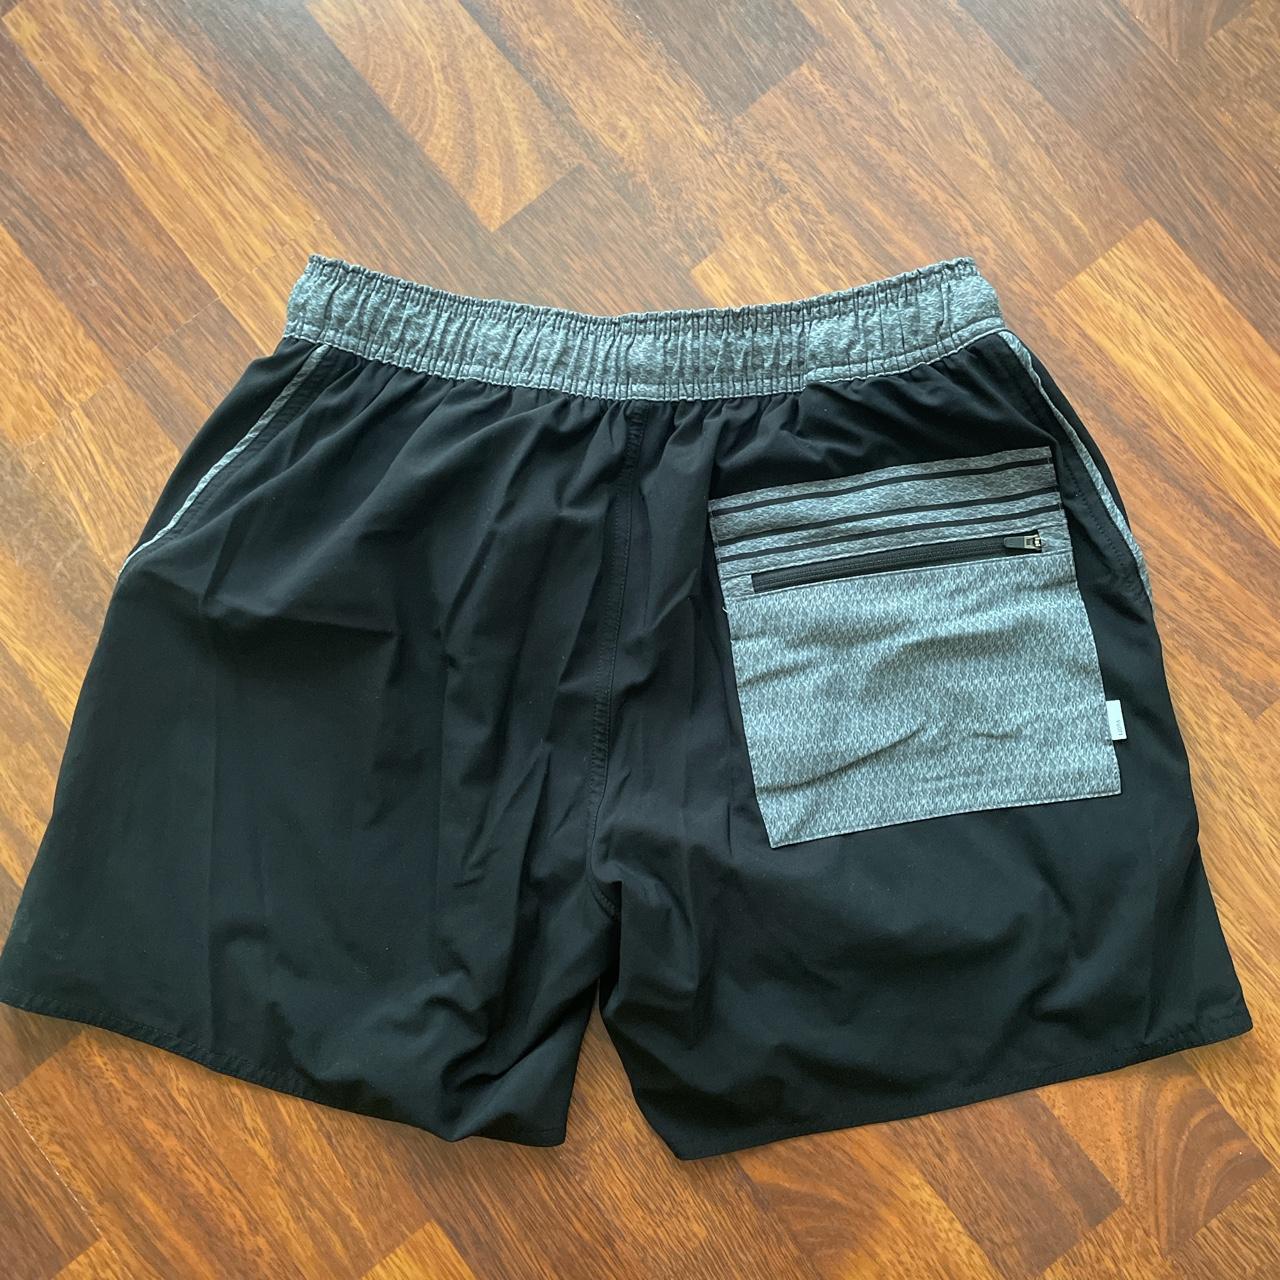 Vuori Men's Black and Grey Shorts | Depop